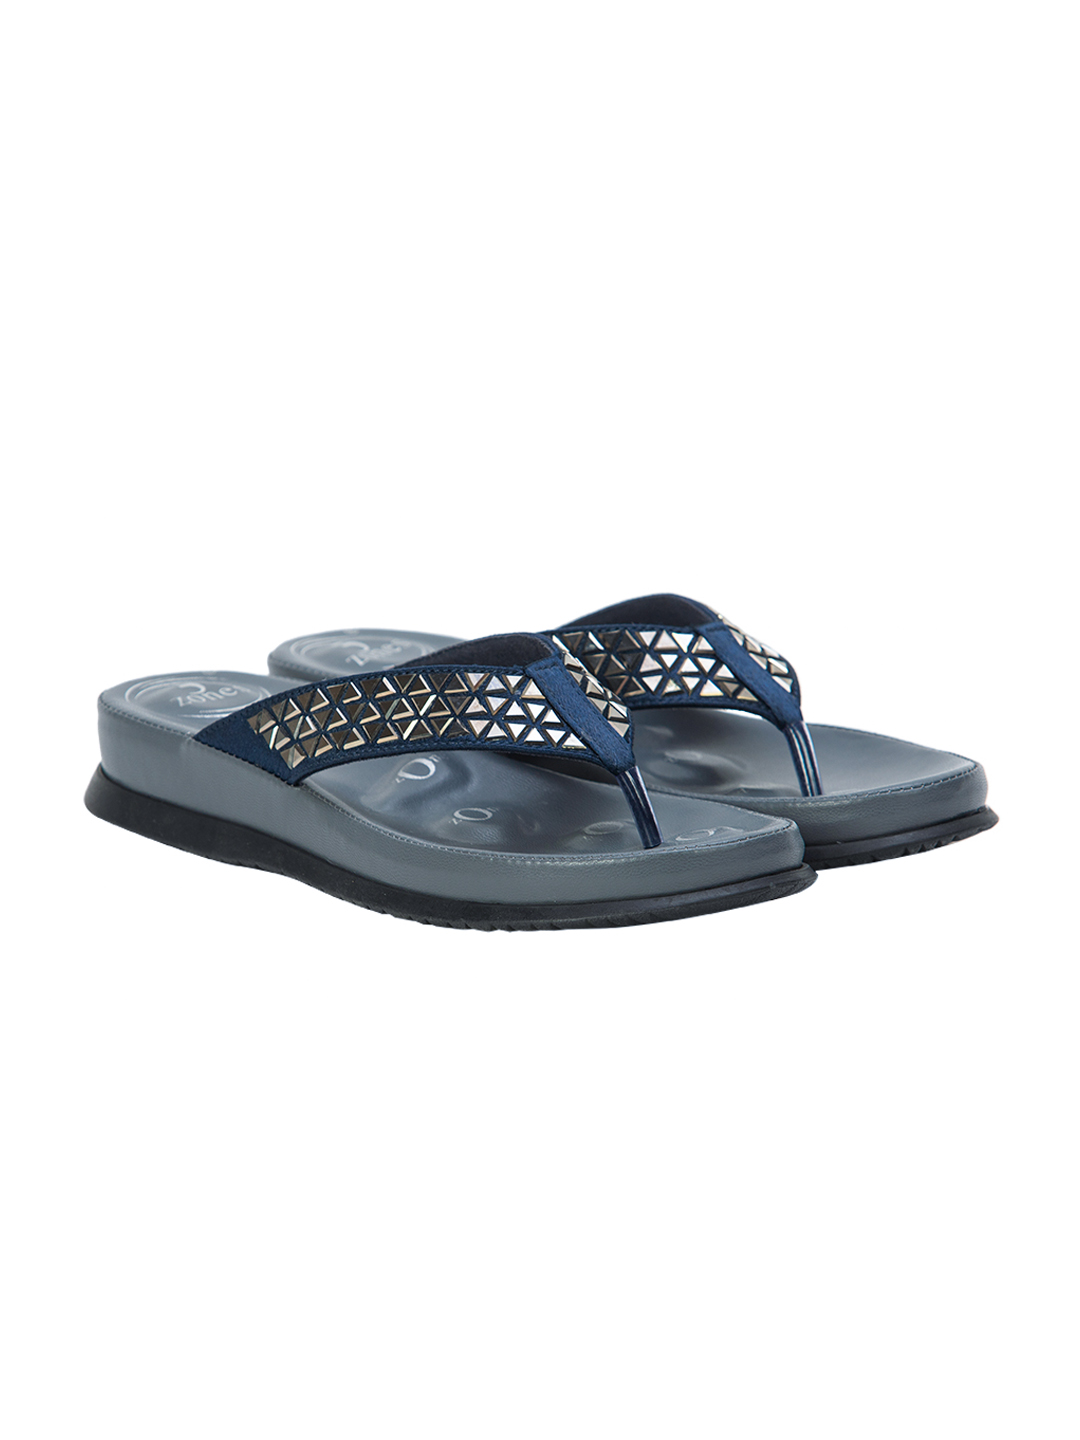 Buy Von Wellx Germany Comfort Beam Blue Slippers Online in Amritsar